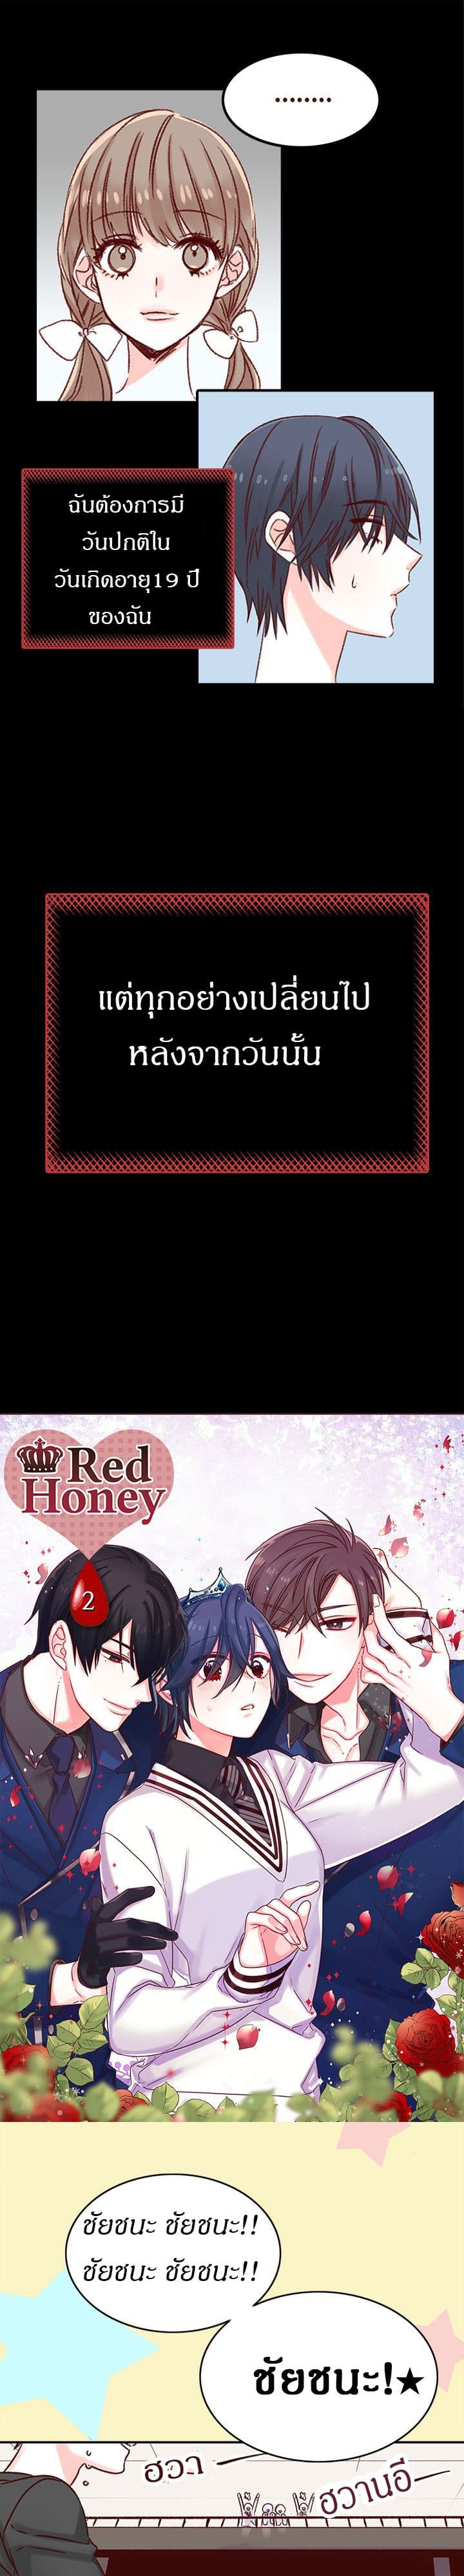 Red Honey - หน้า 1